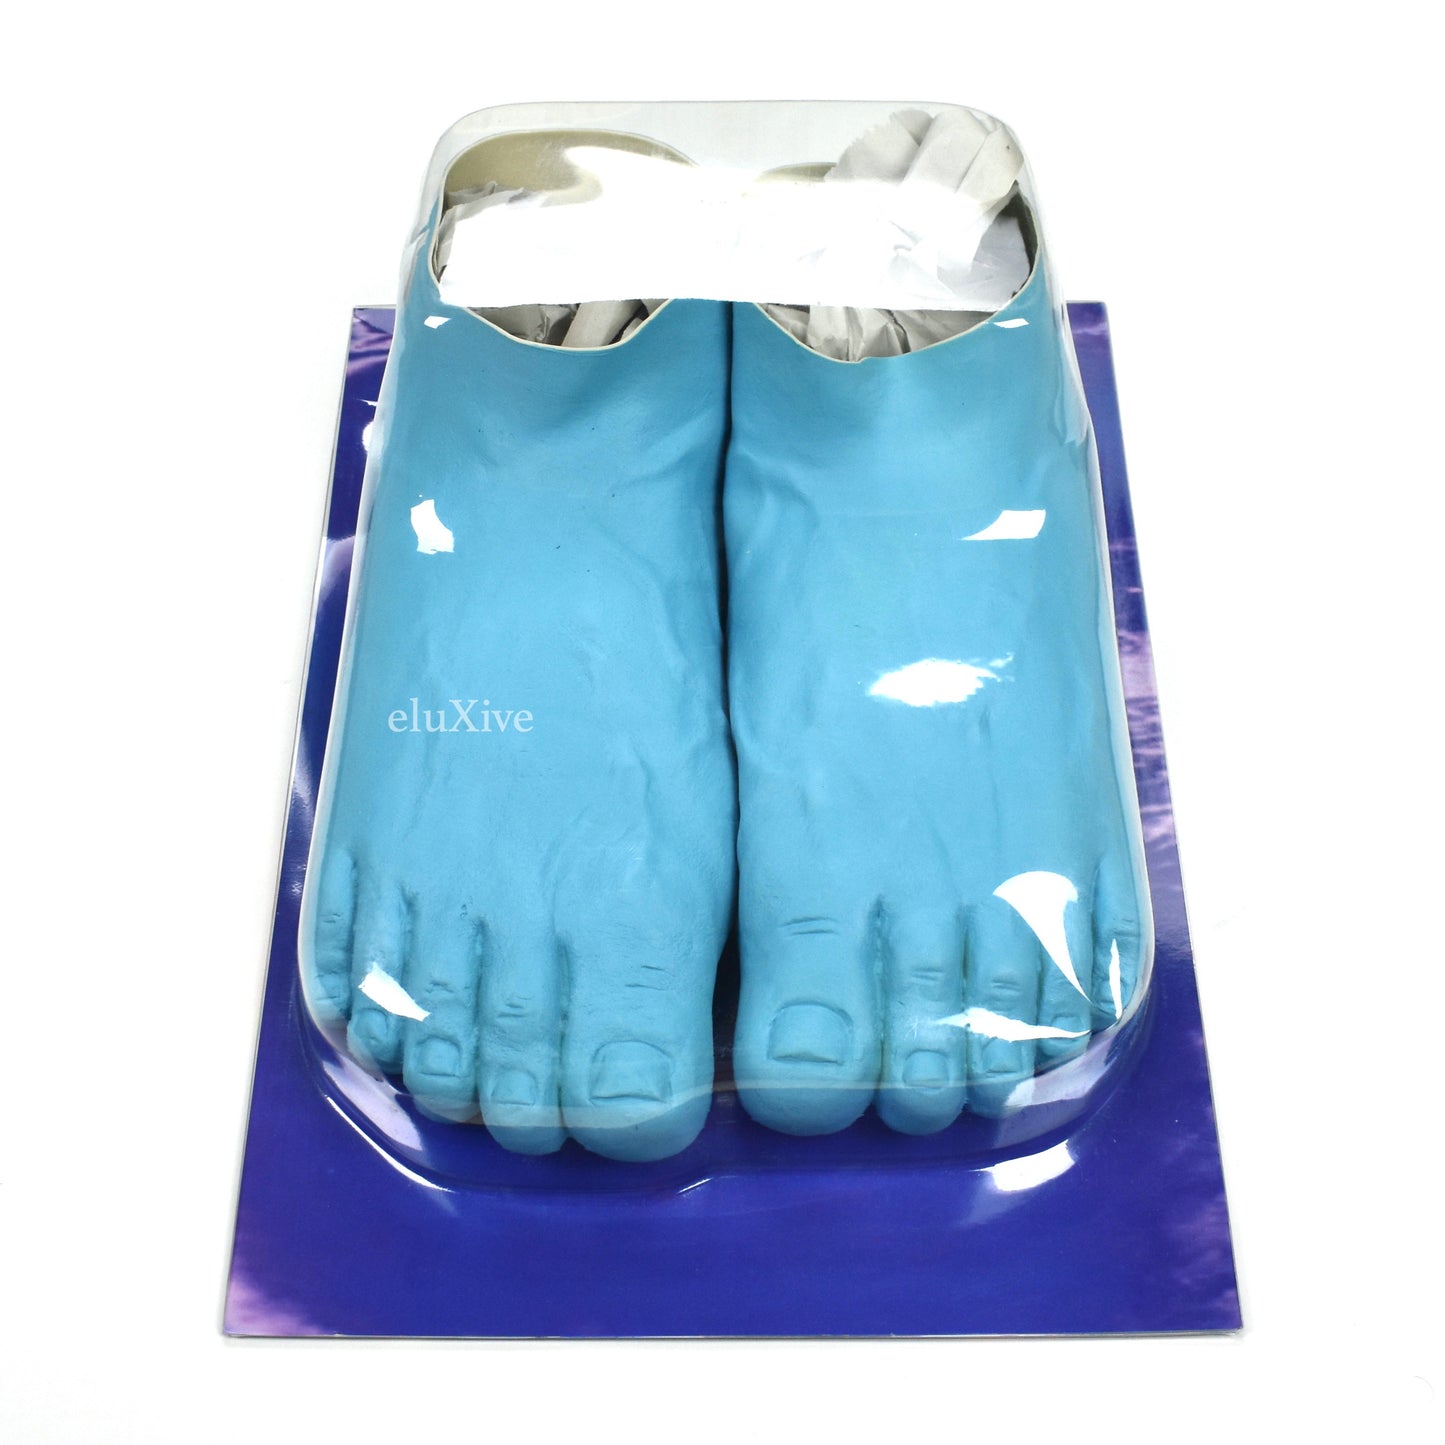 Imran Potato - Caveman Foot Slippers 'Smurf' (Blue)